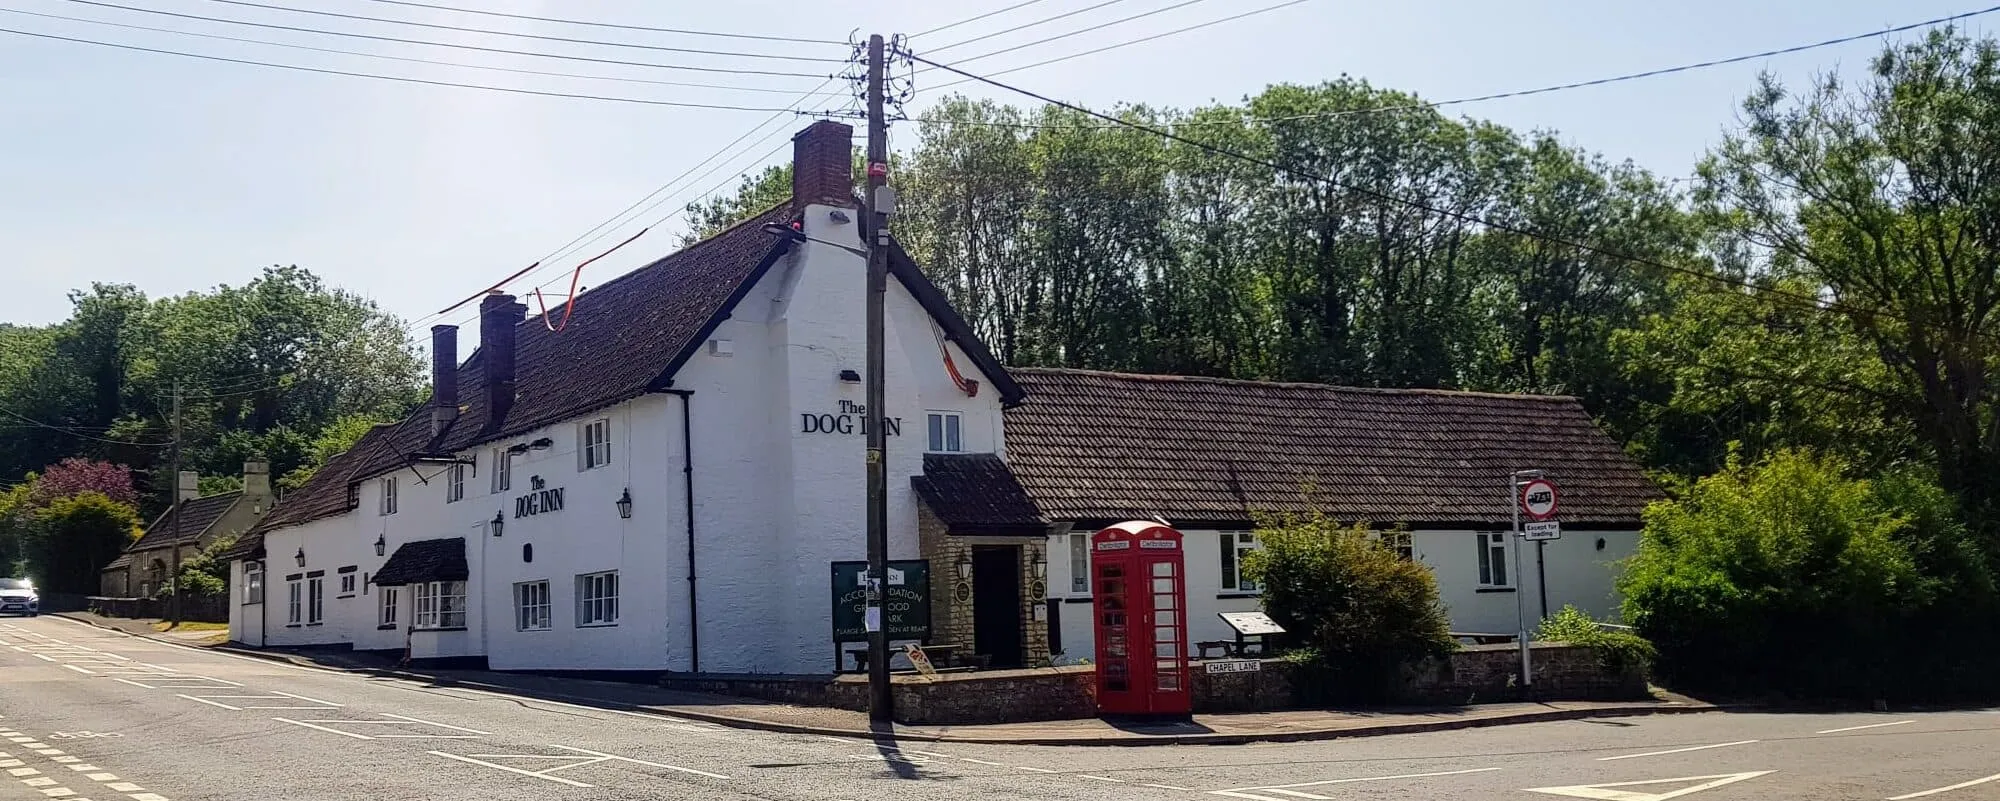 The Dog Inn (Old Sodbury)